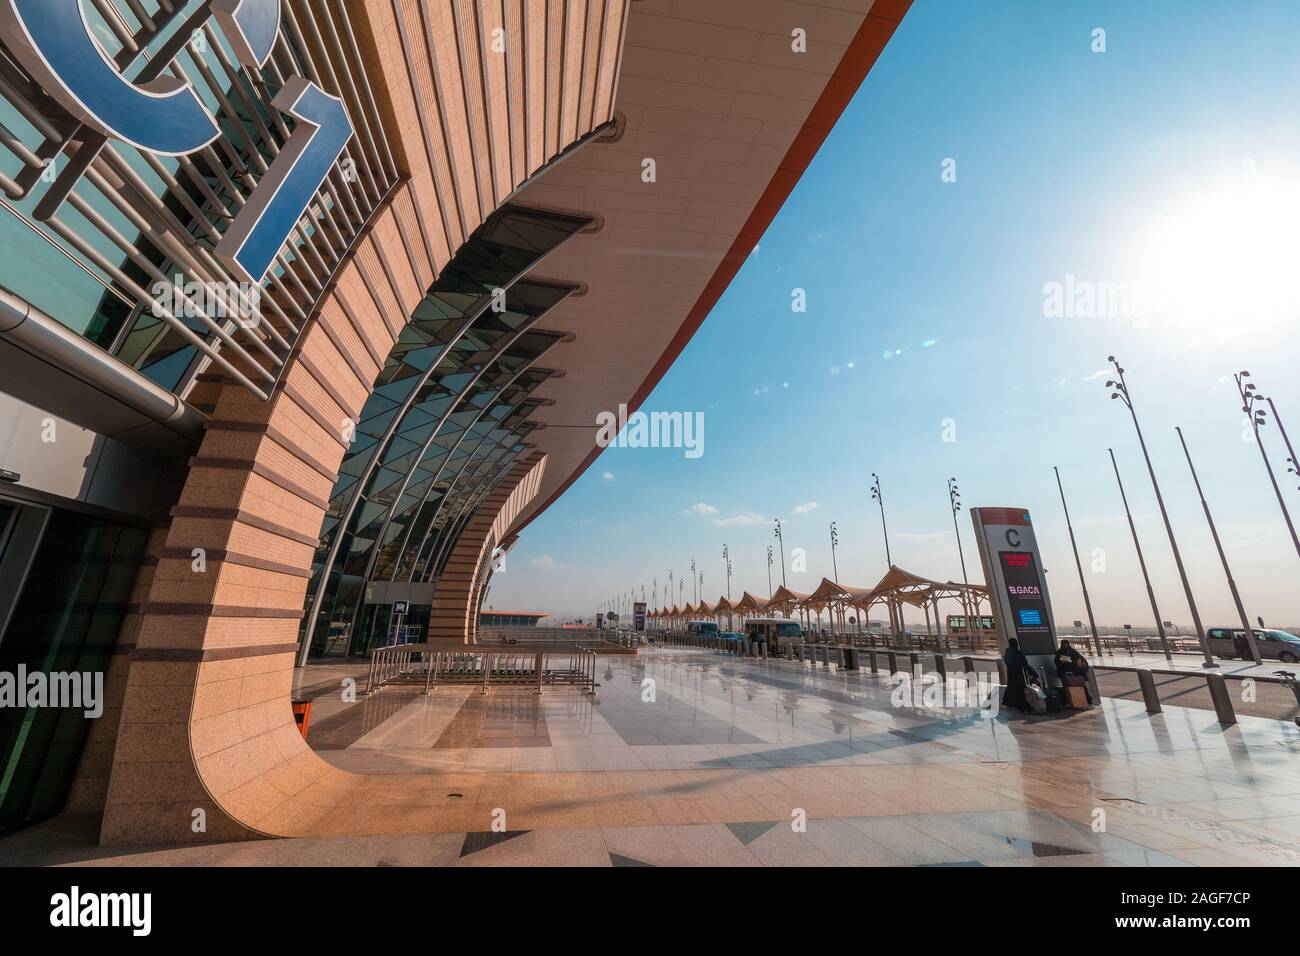 Exterior view of the brand new Terminal 1 at the King Abdulaziz International Airport (JED) in Jeddah, Kingdom of Saudi Arabia Stock Photo